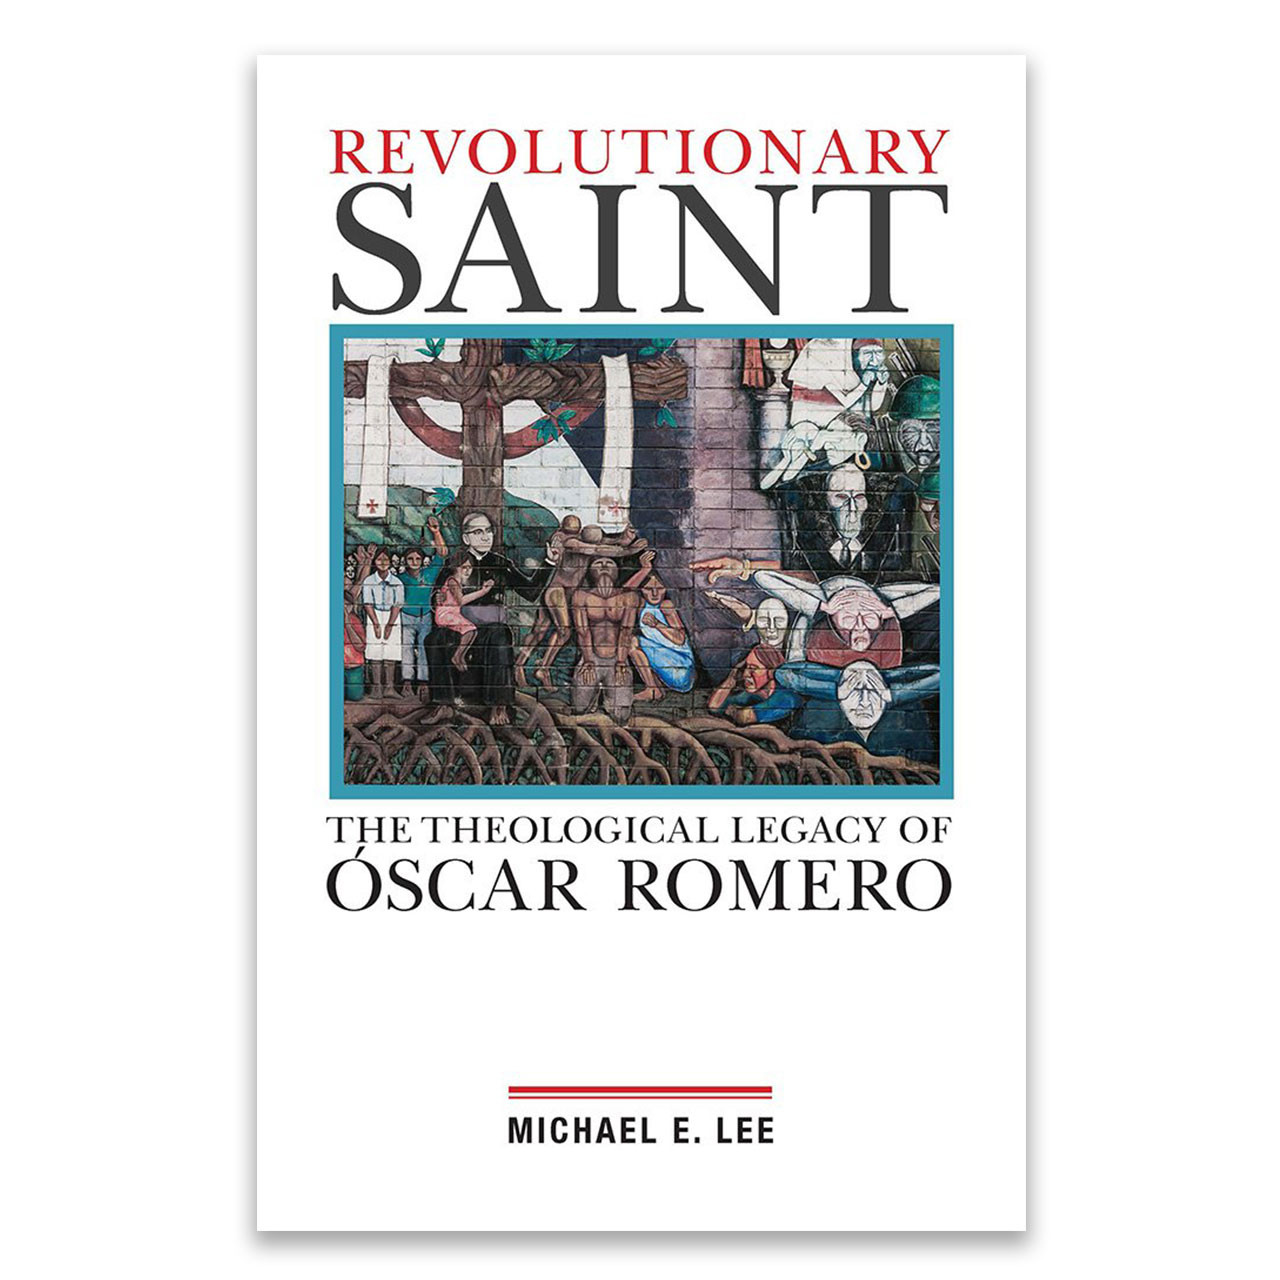 Revolutionary Saint: The Theological Legacy of Oscar Romero by Michael E. Lee